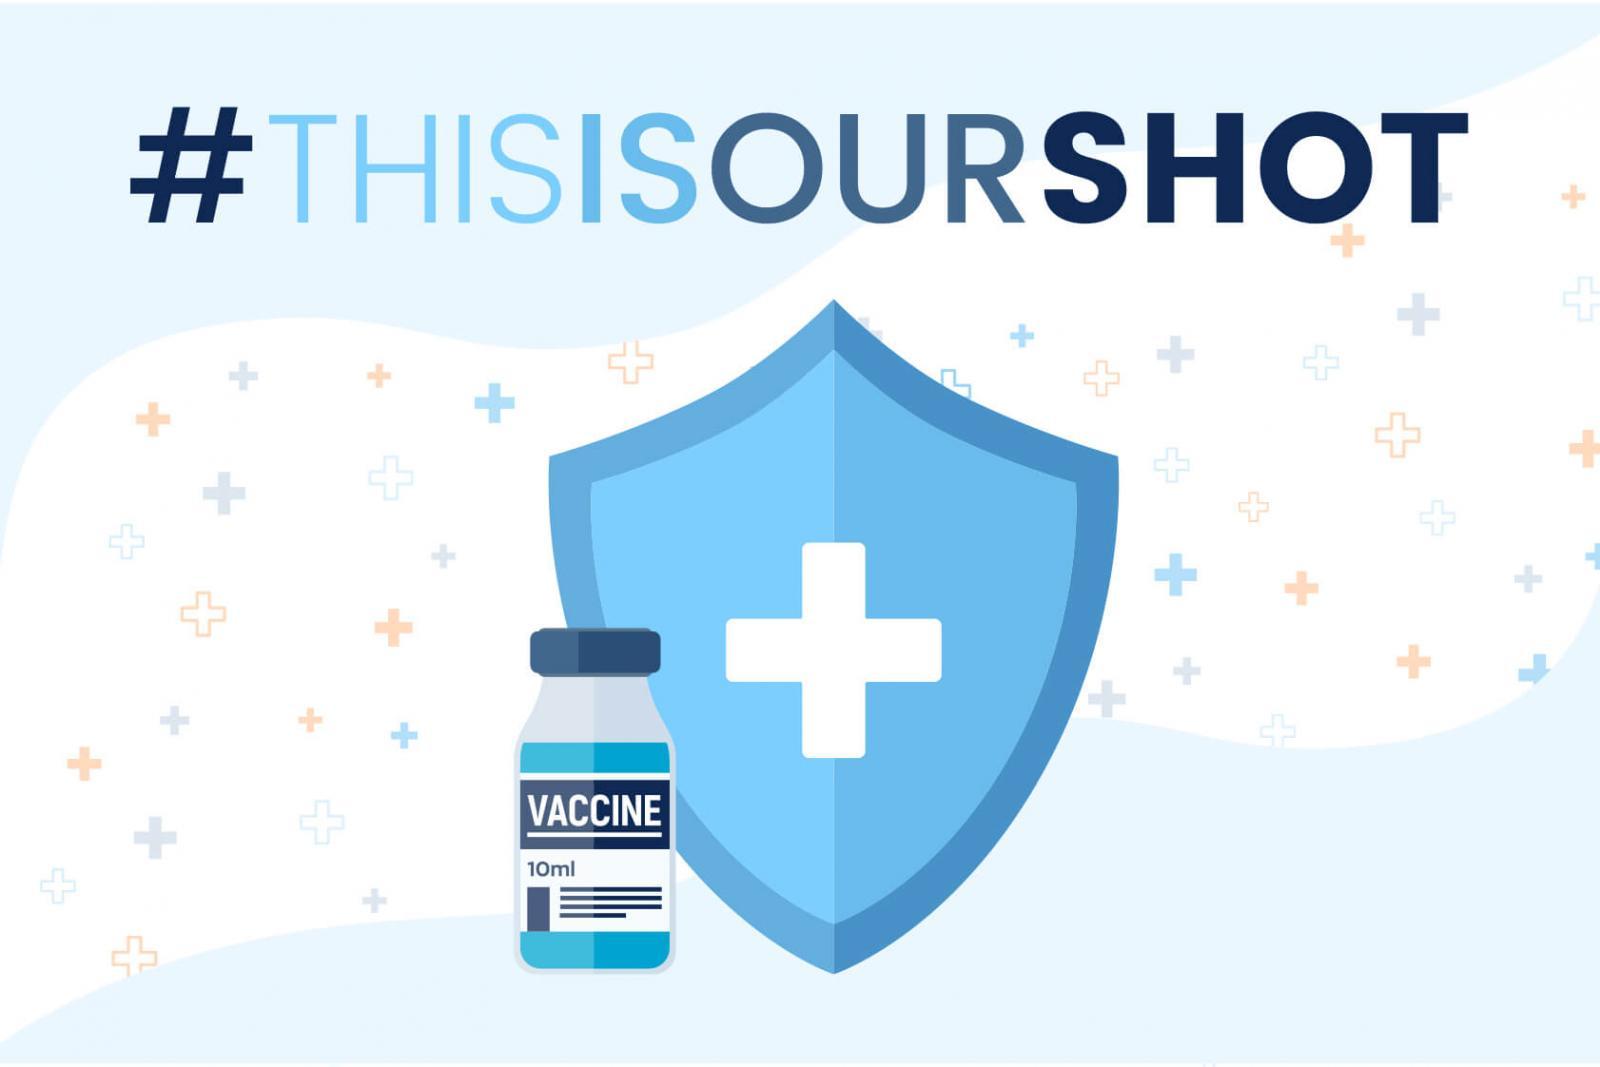 Vaccine resource hub